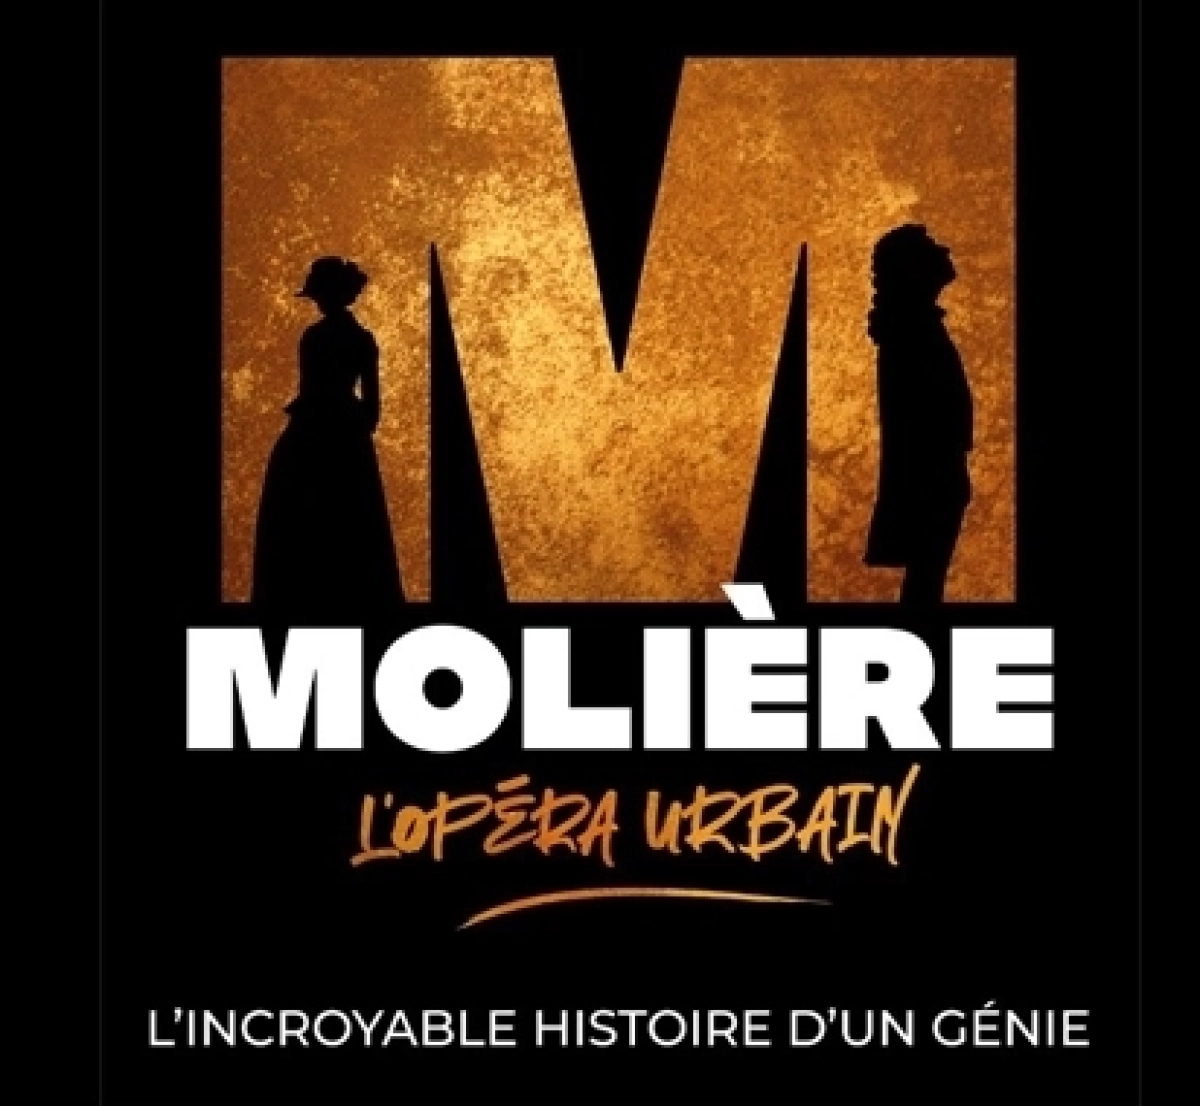 Moliere L'opera Urbain at Zenith Nancy Tickets